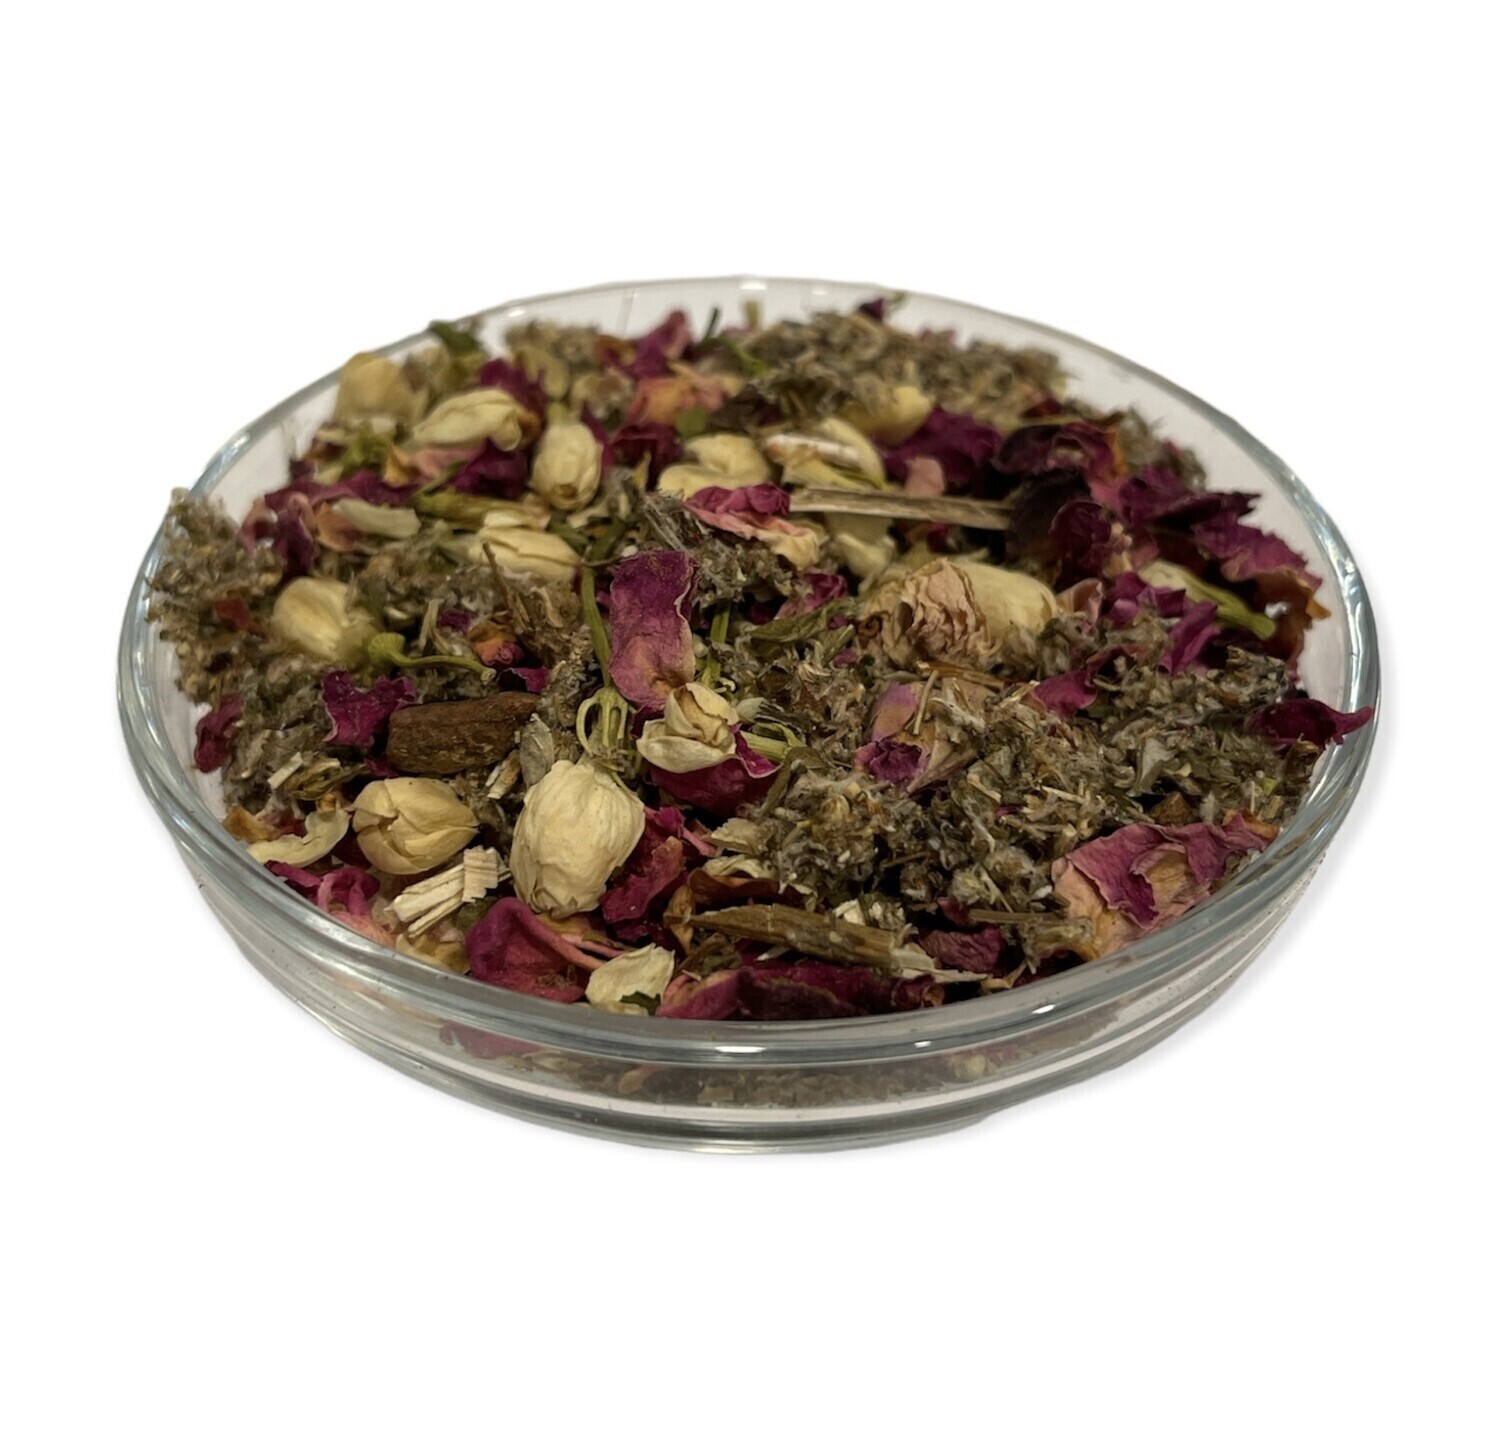 Scott Cunningham's Dream Herbal Tea